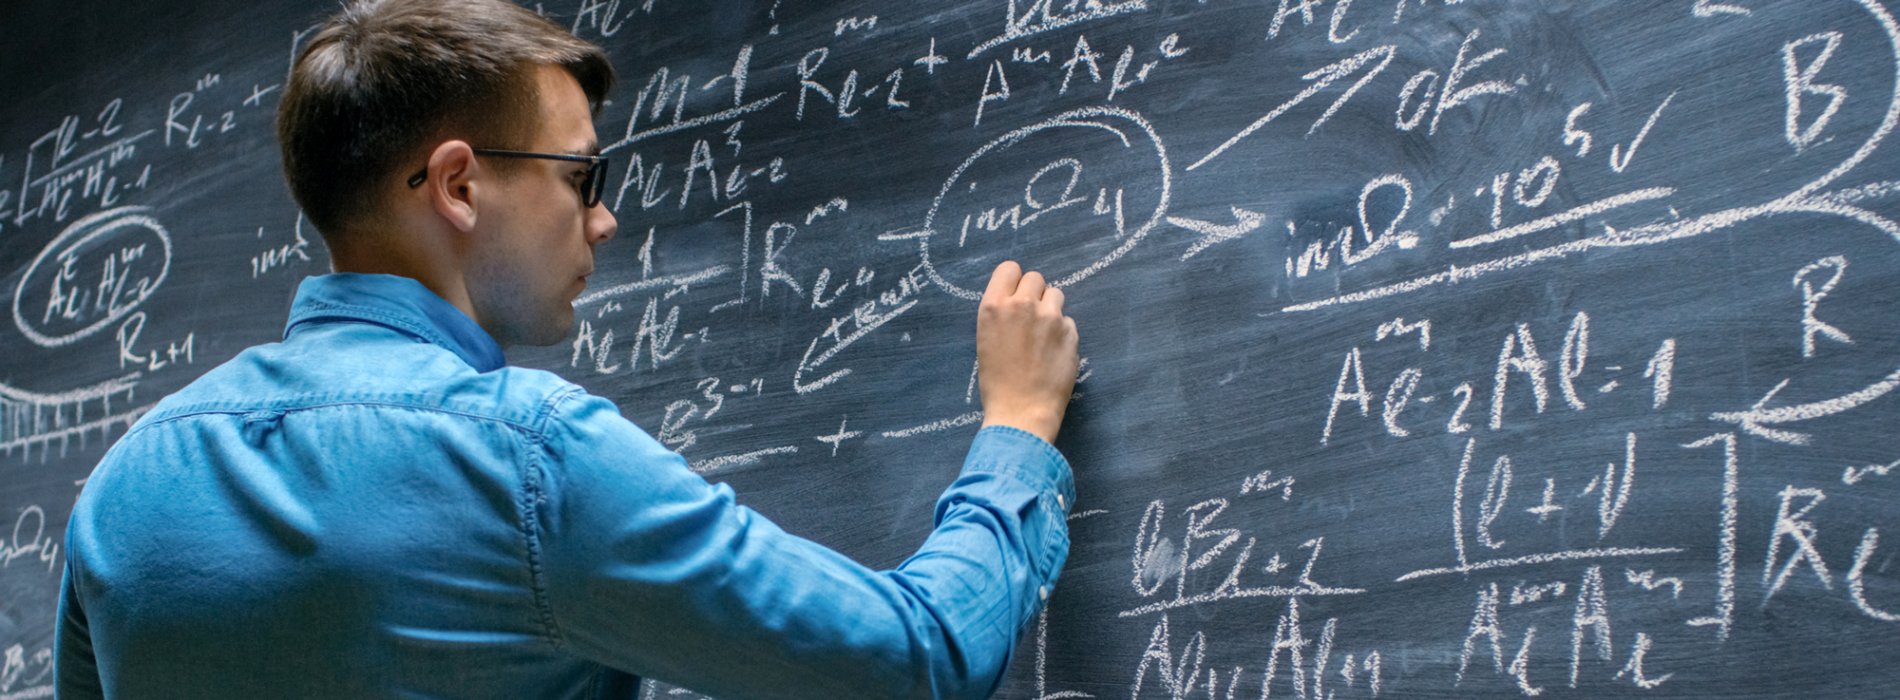 Student working on a mathematics formula at a chalkboard